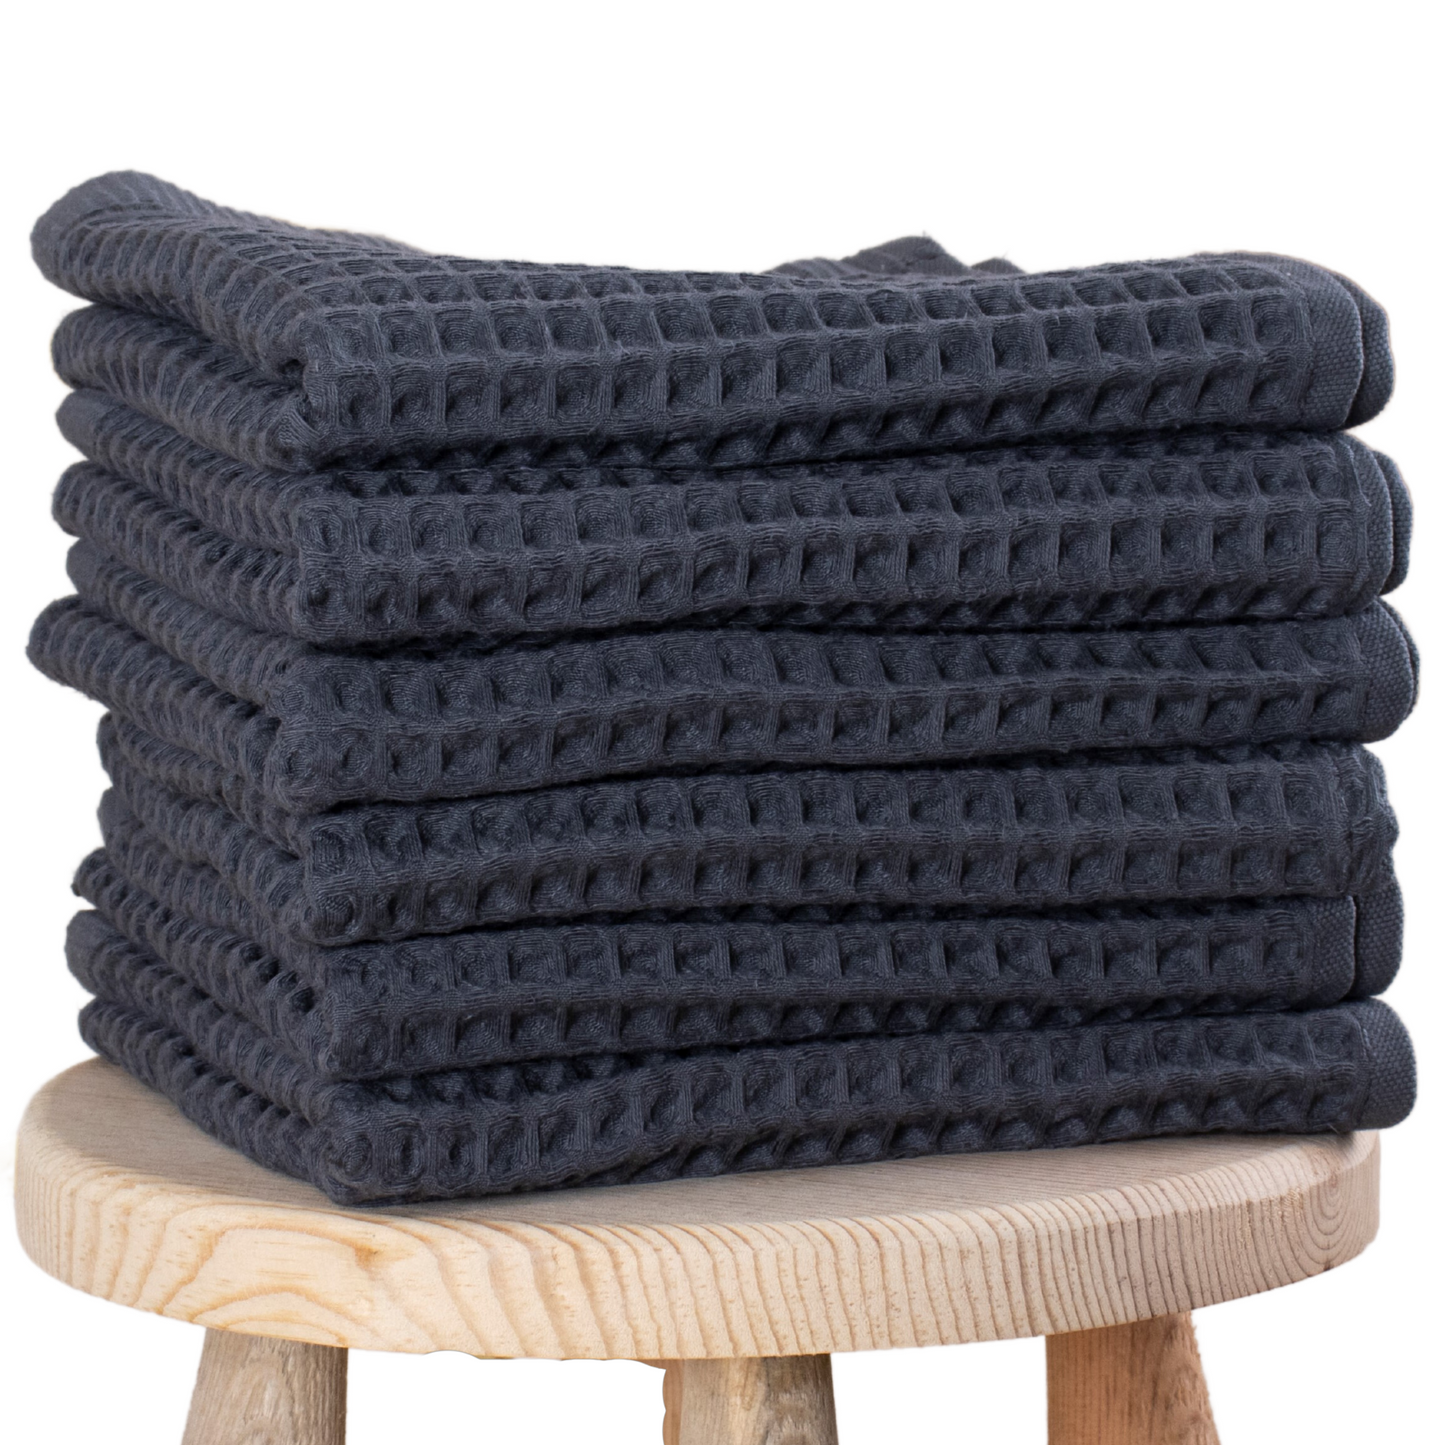 Honeycomb Towel - Waffle Towel - Kitchen and Hand Towel - Dark Gray